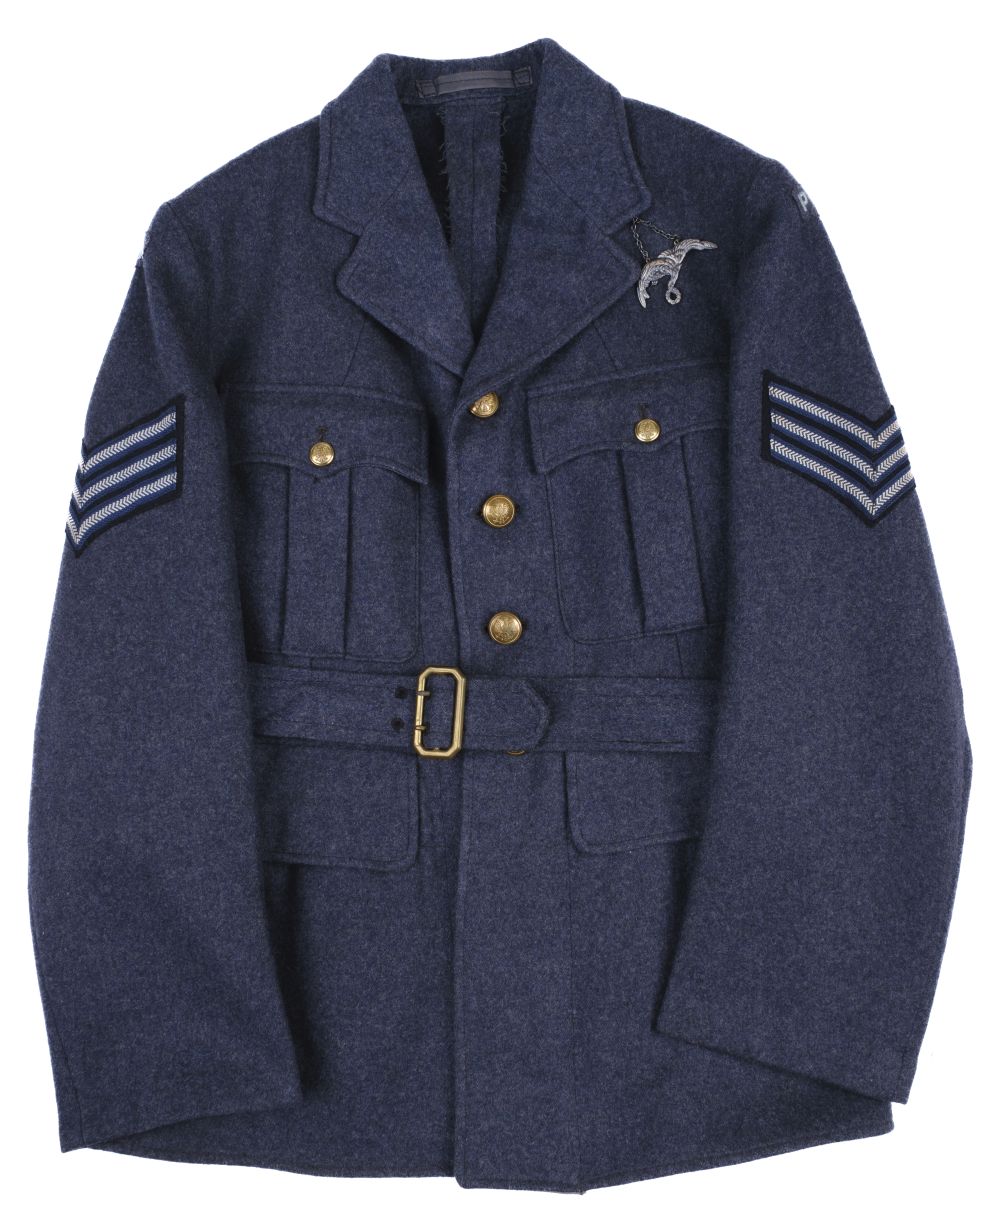 Royal Air Force. WWII RAF tunic worn by a Polish Pilot